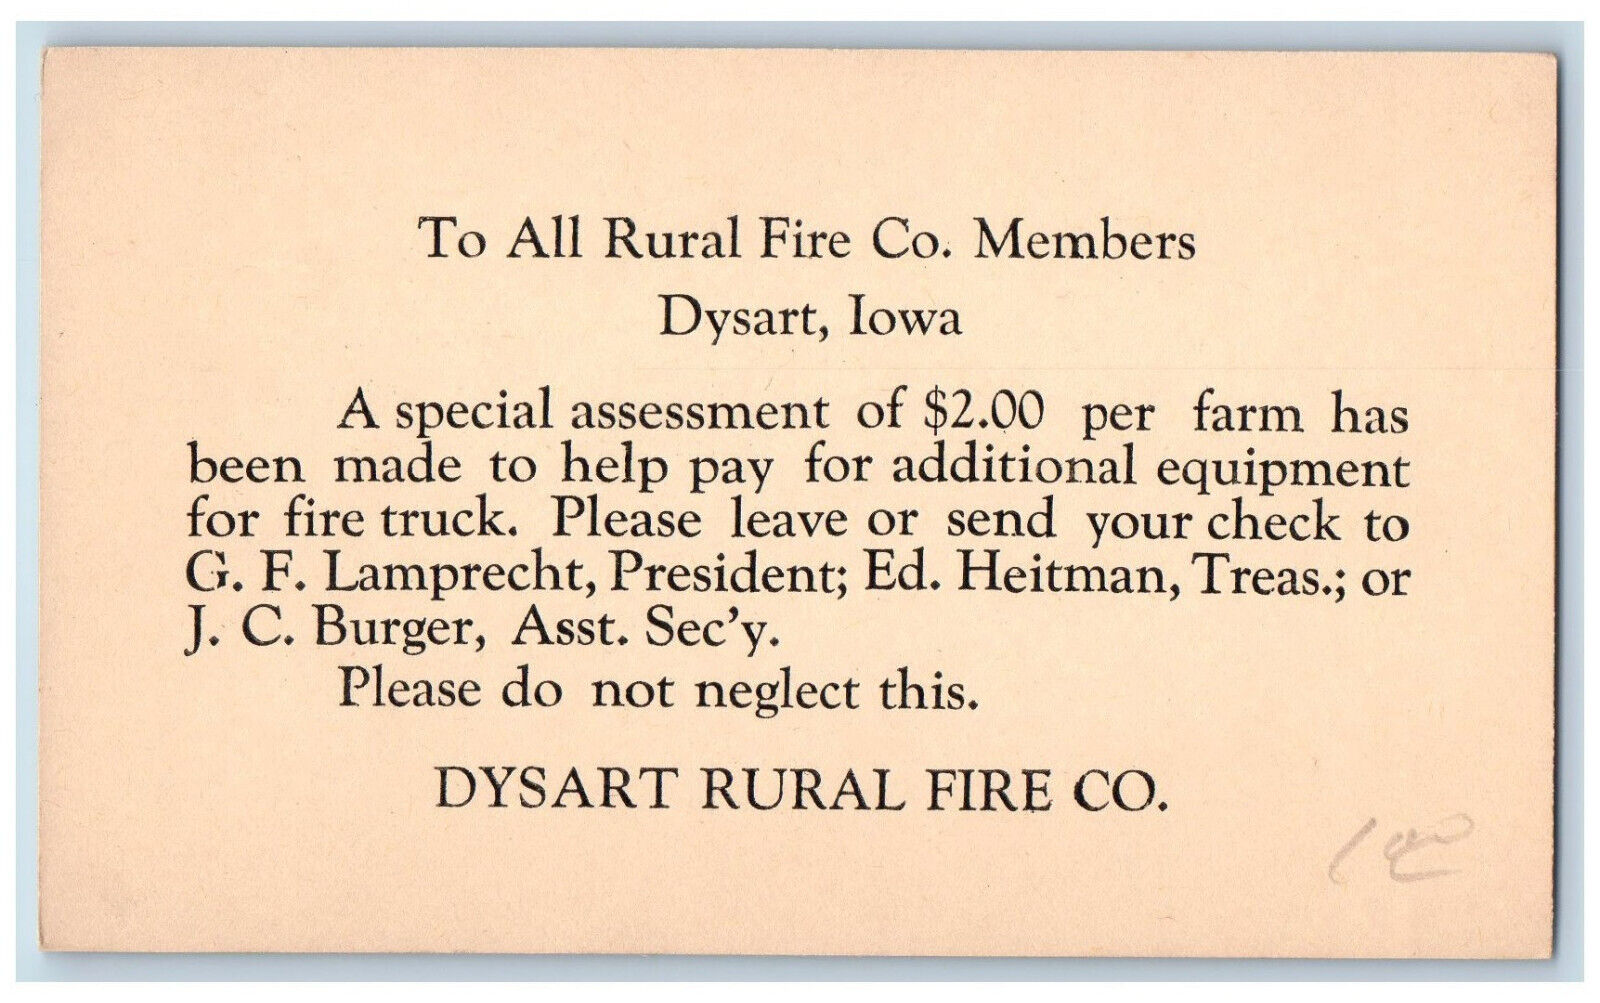 Dysart Iowa IA Postal Card Dysart Rural Fire Co. Letter for Members c1940's